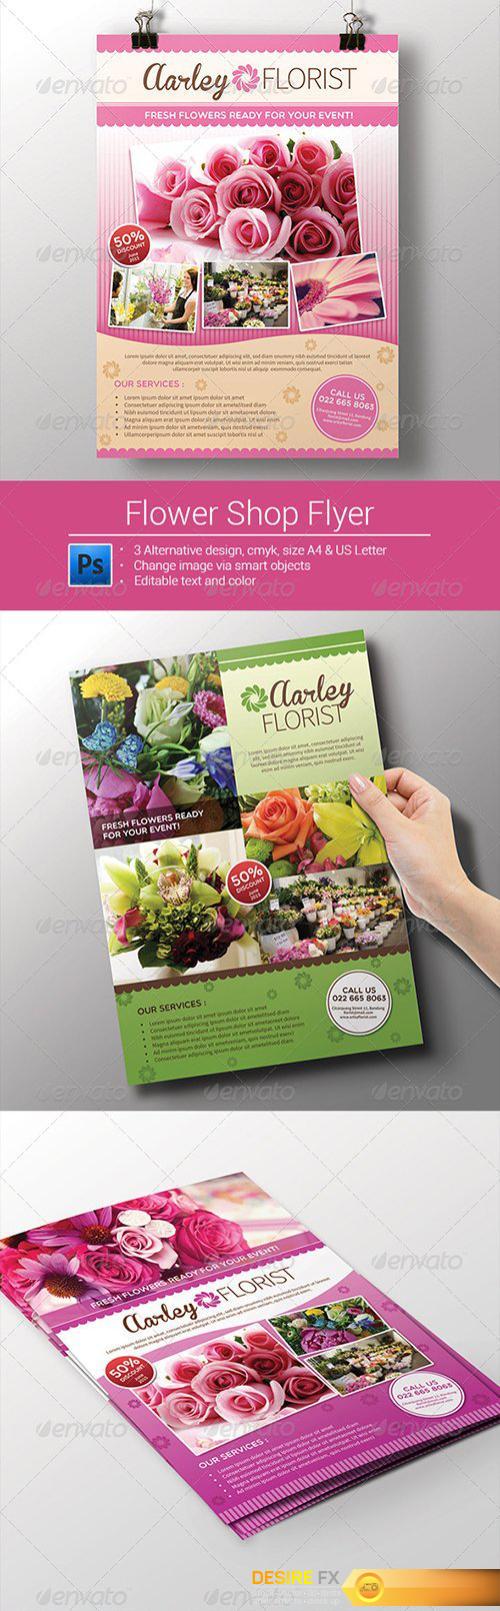 Graphicriver - Flower Shop Flyer / Magazine Ad 8279050